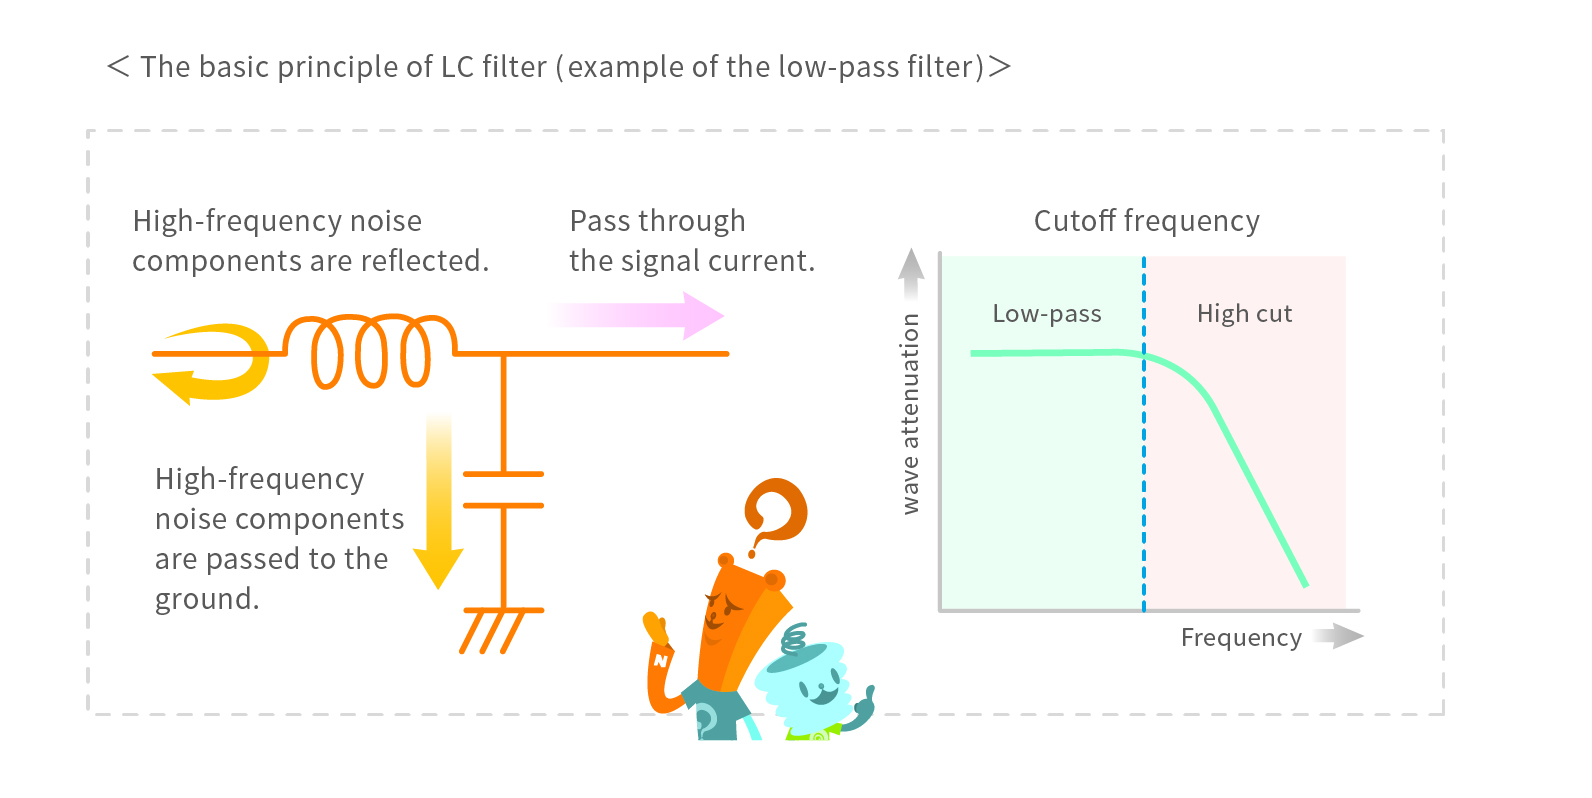 Basic principle of LC filter